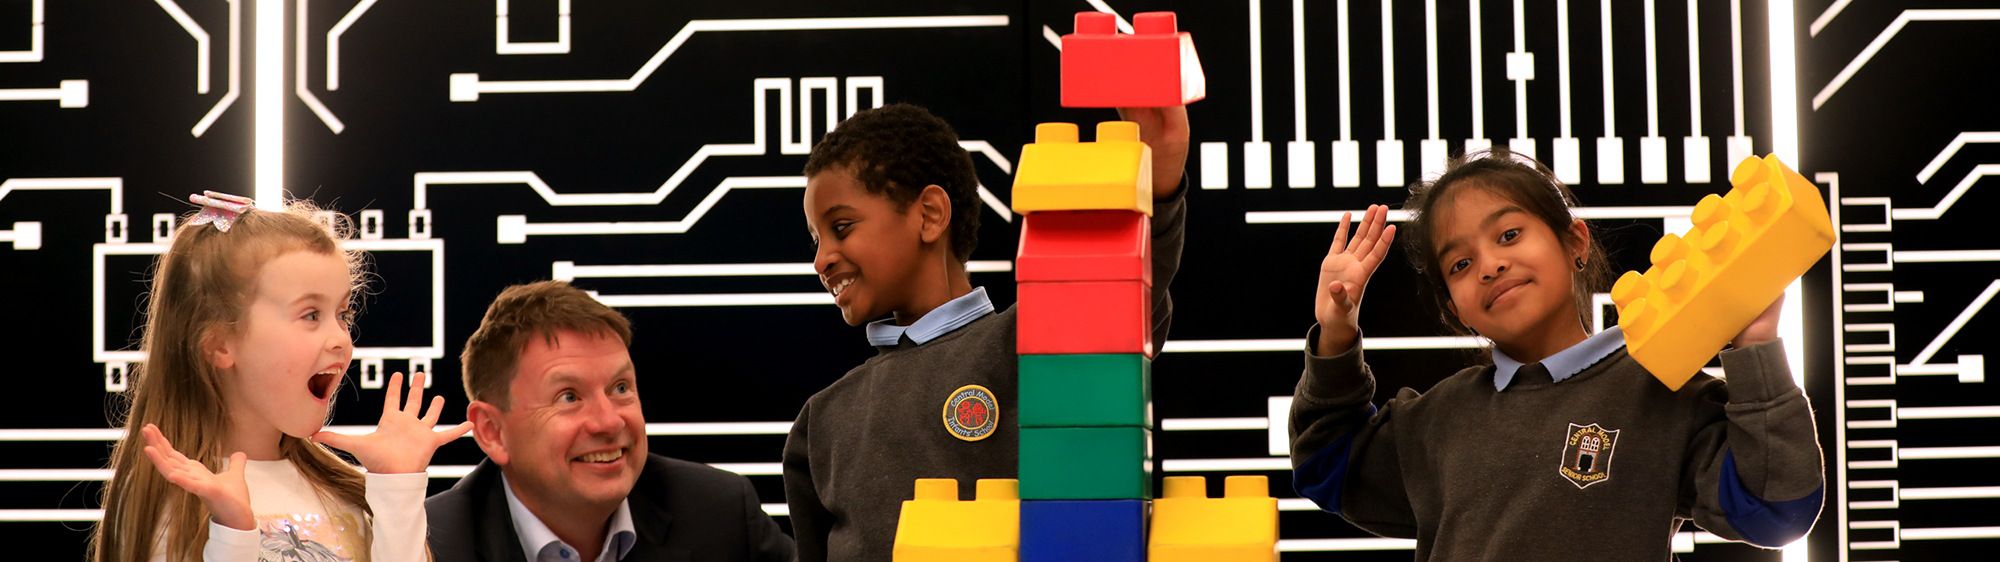 Seamus Hand, managing partner, KPMG in Ireland, with children from the KPMG Lego Club in Platform X